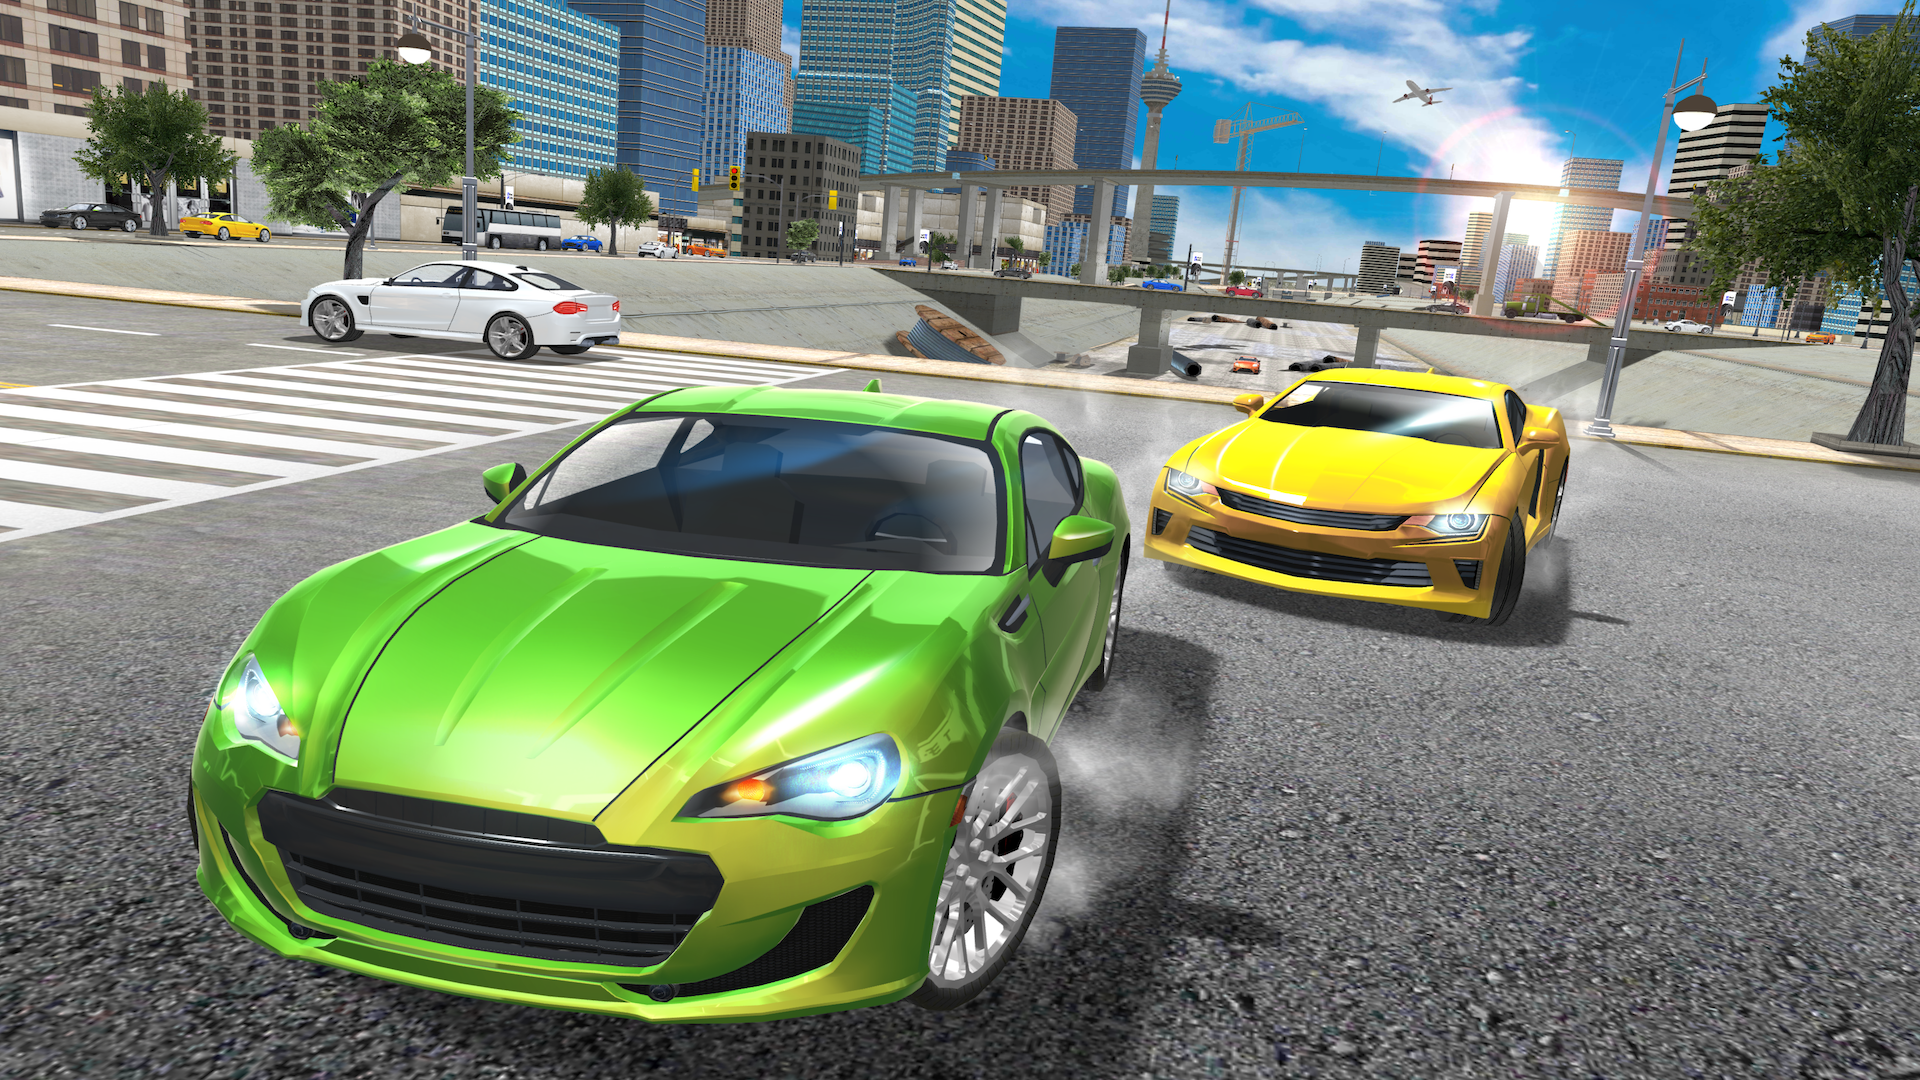 Screenshot 1 of Симулятор вождения автомобиля Дрифт 2.0.1